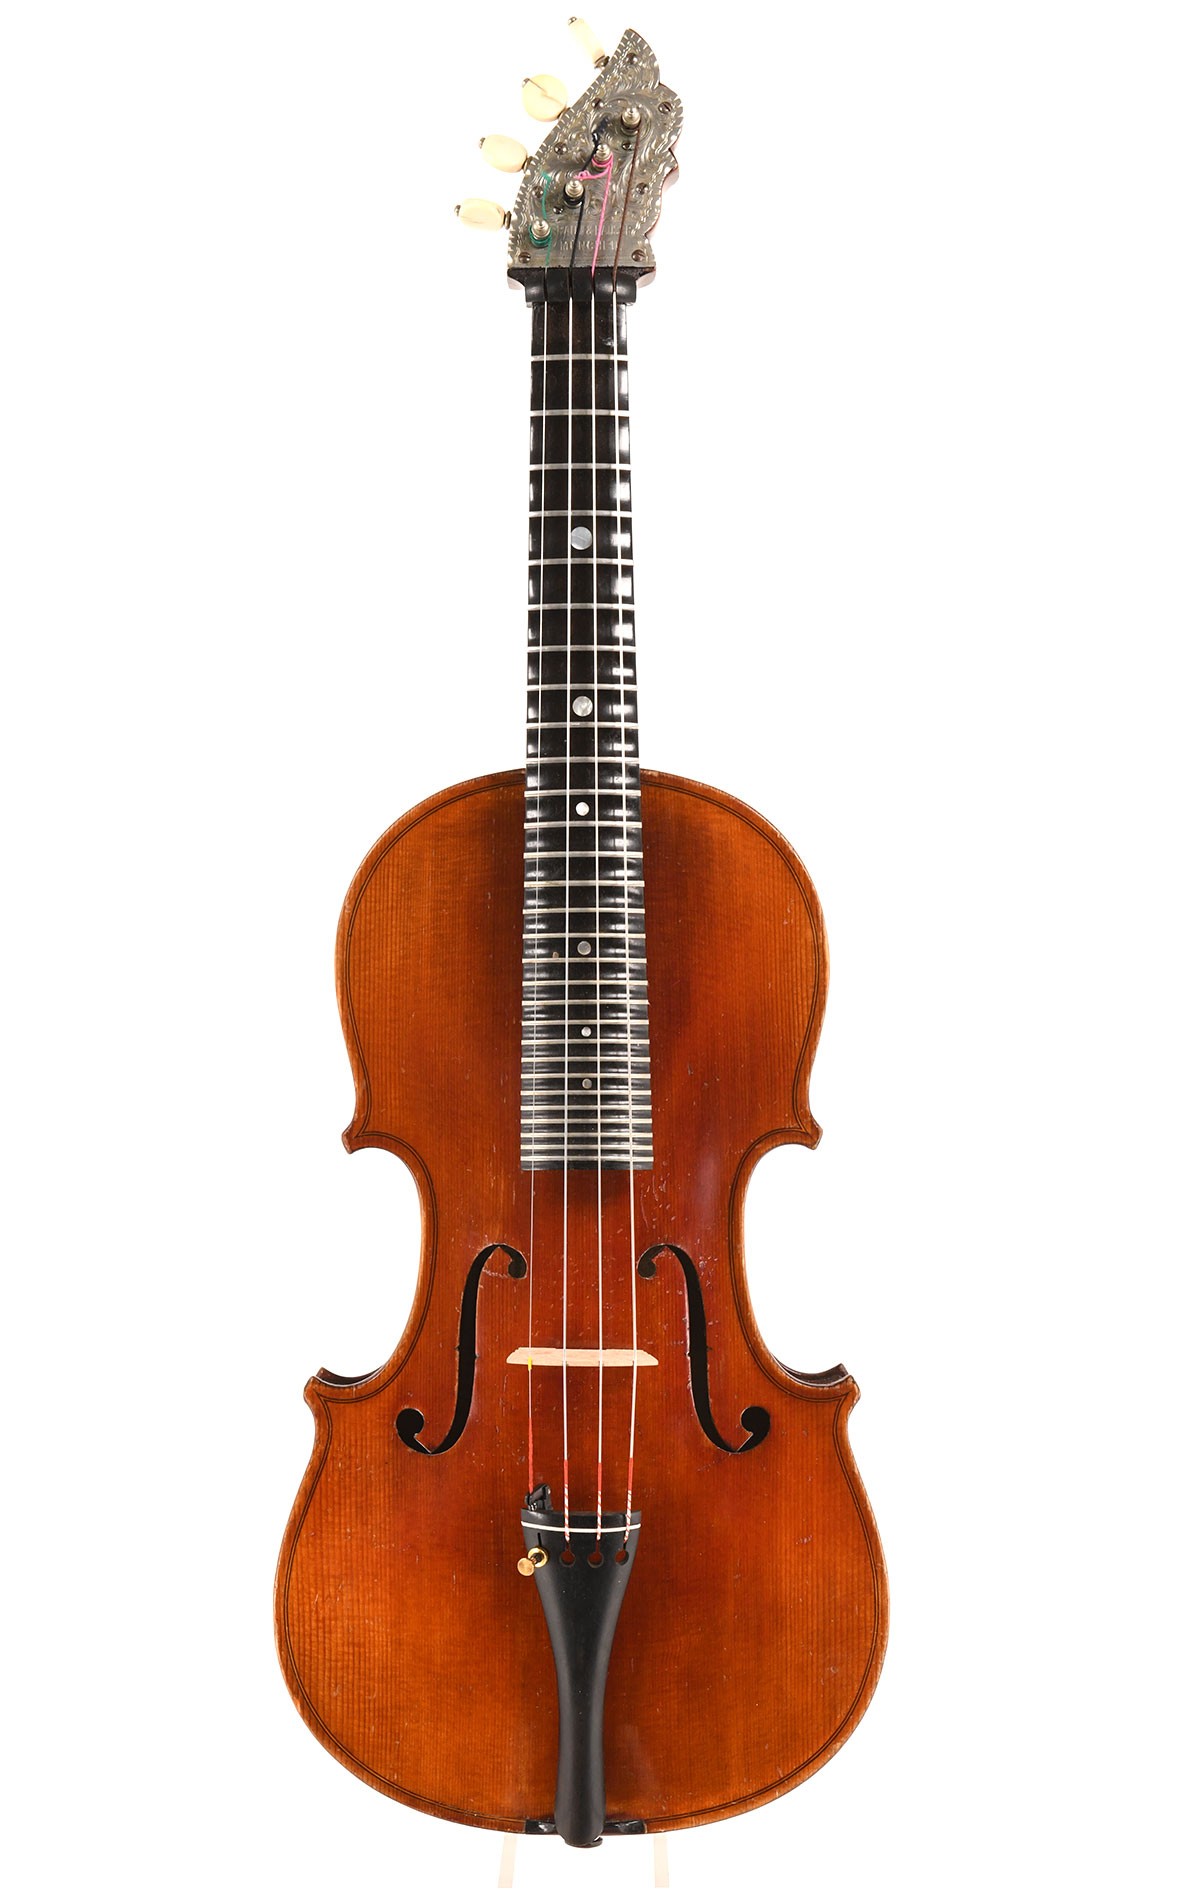 German Lap violin (bowed zither) by Braun & Hauser, München c.1916